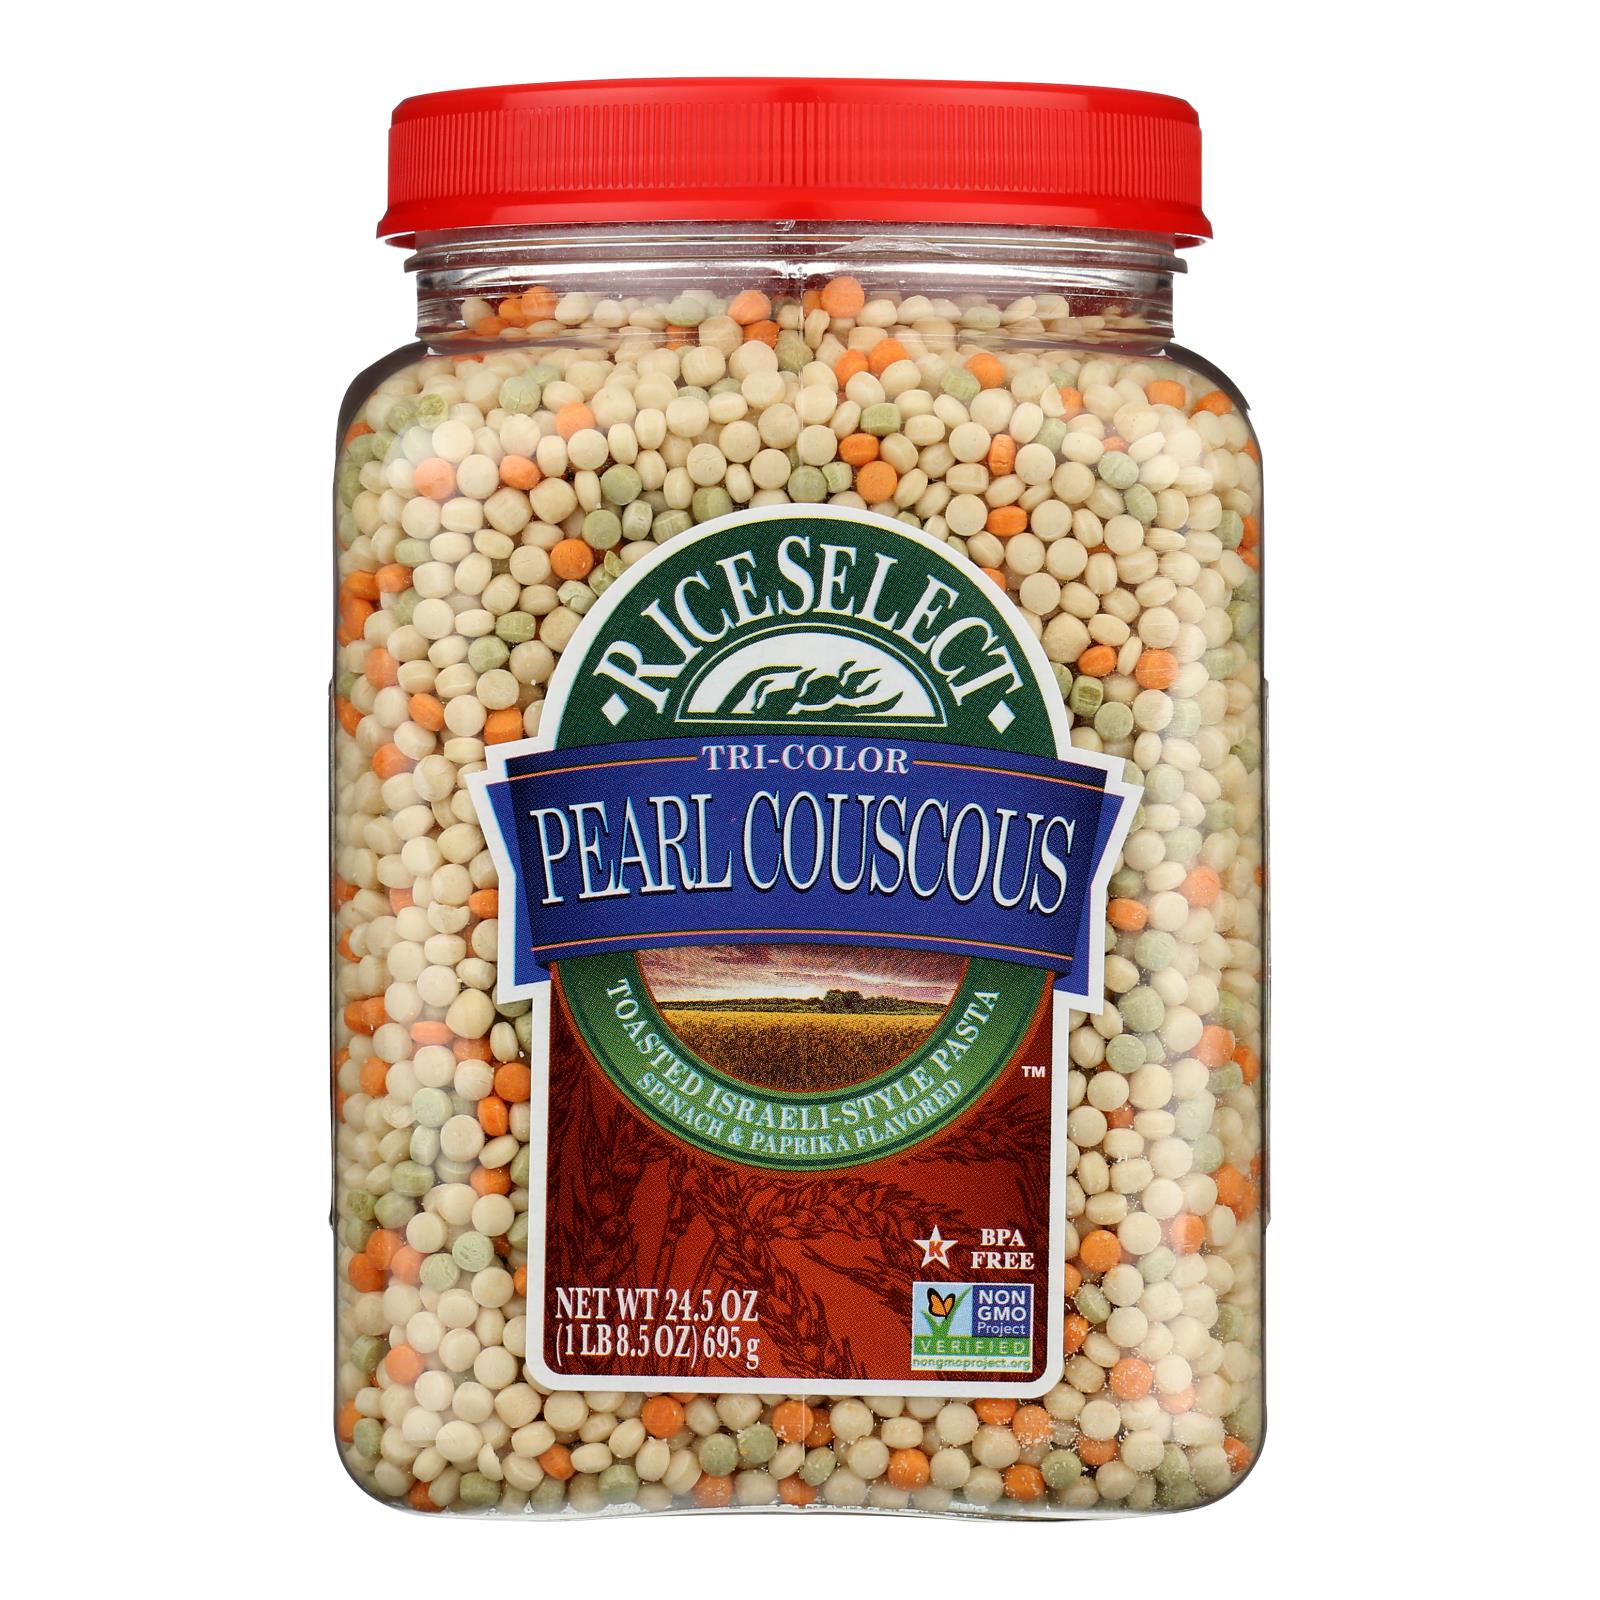 Rice Select Couscous - Pearl - Tri-Color - Case of 4 - 24.5 oz